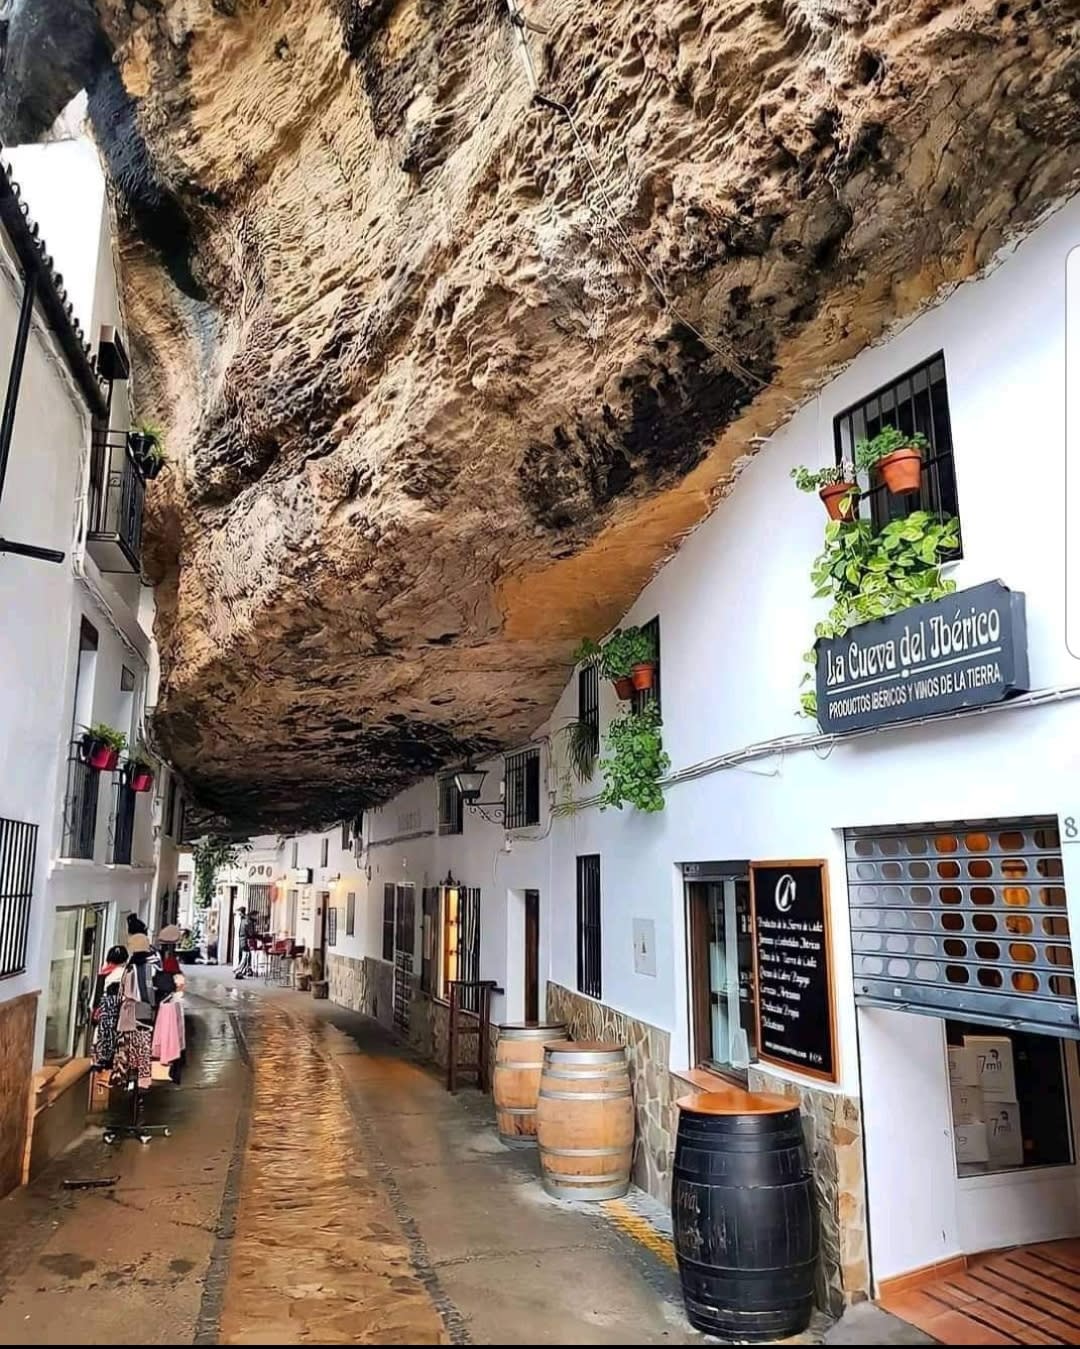 Living under a rock in Setenil De las Bodegas, Cádiz, Spain